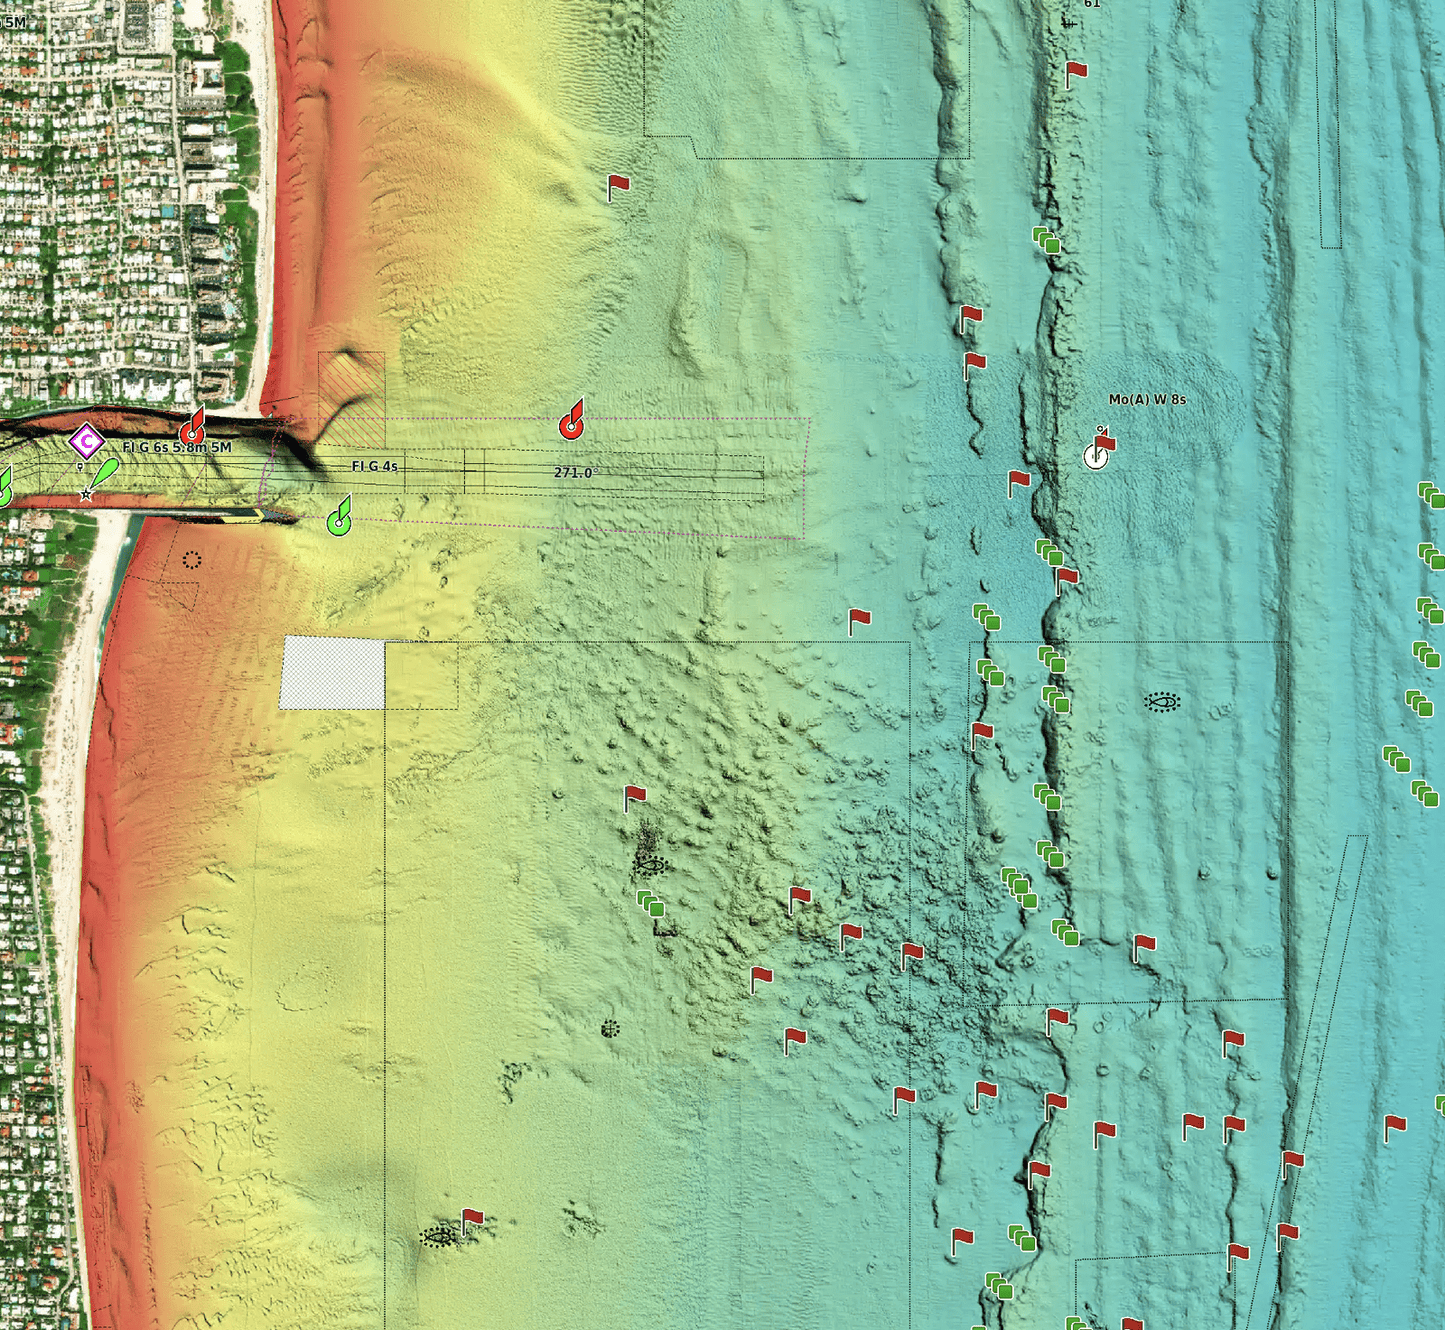 Palm Beach Fishing Spots - GPS numbers